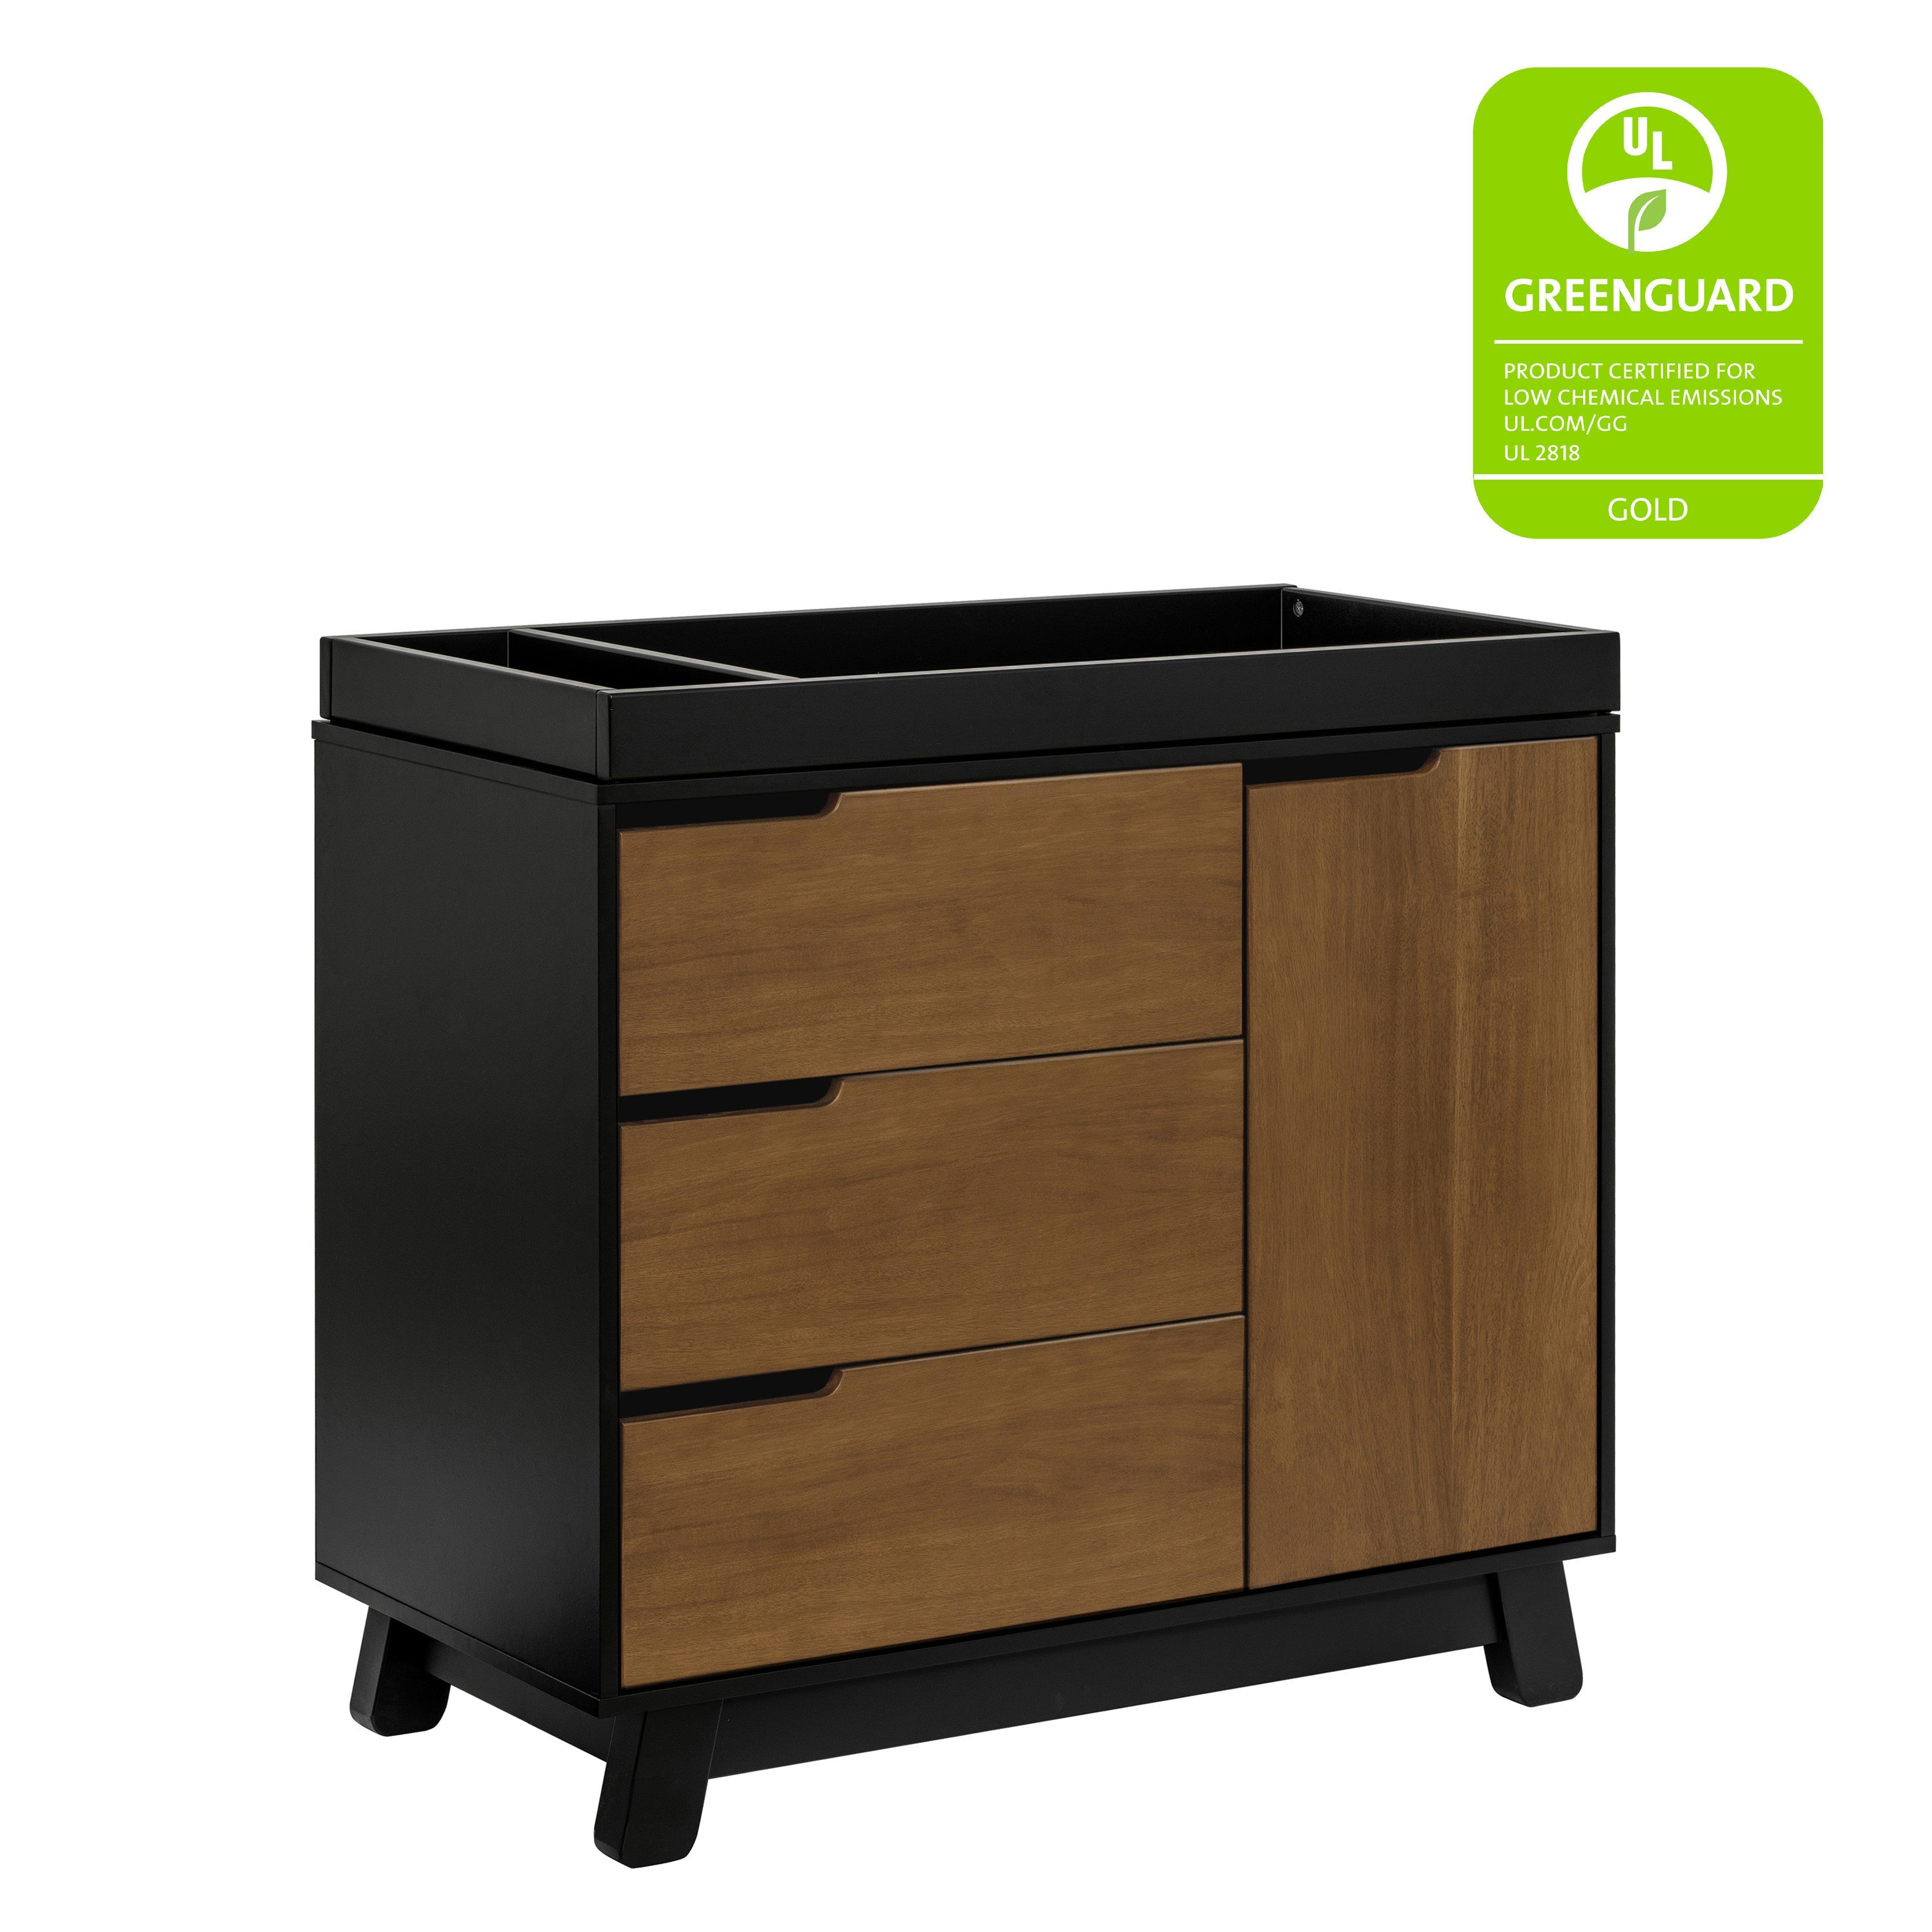 Buy black-natural-walnut Hudson 3-Drawer Changer Dresser with Removable Changing Tray